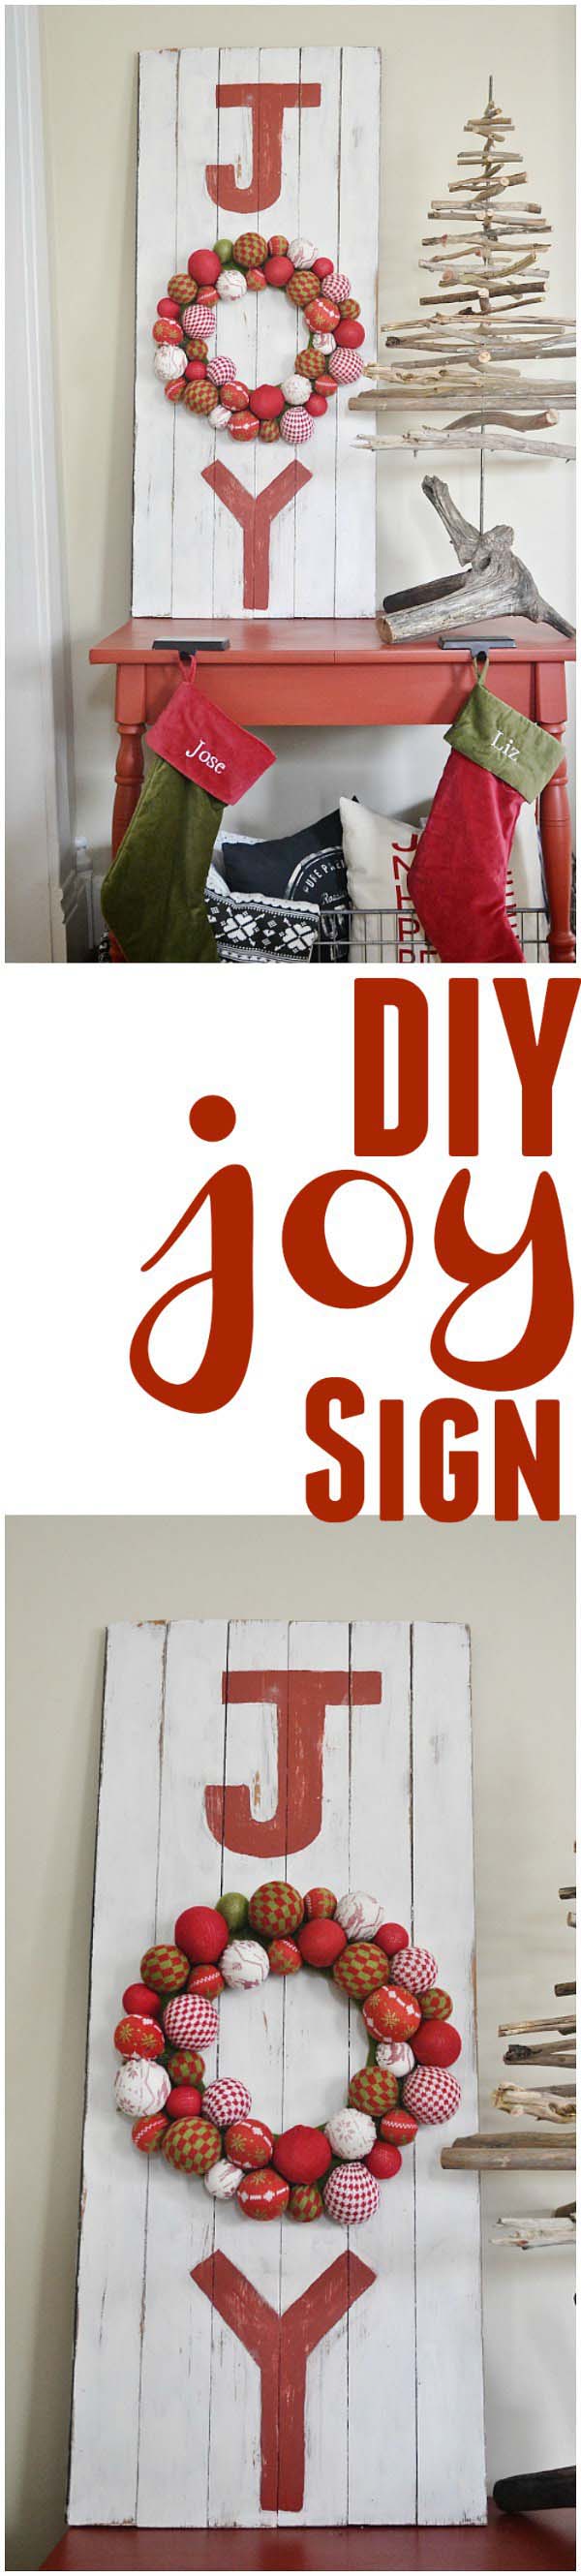 DIY Joy Sign #Christmas #walldecor #diy #decorhomeideas